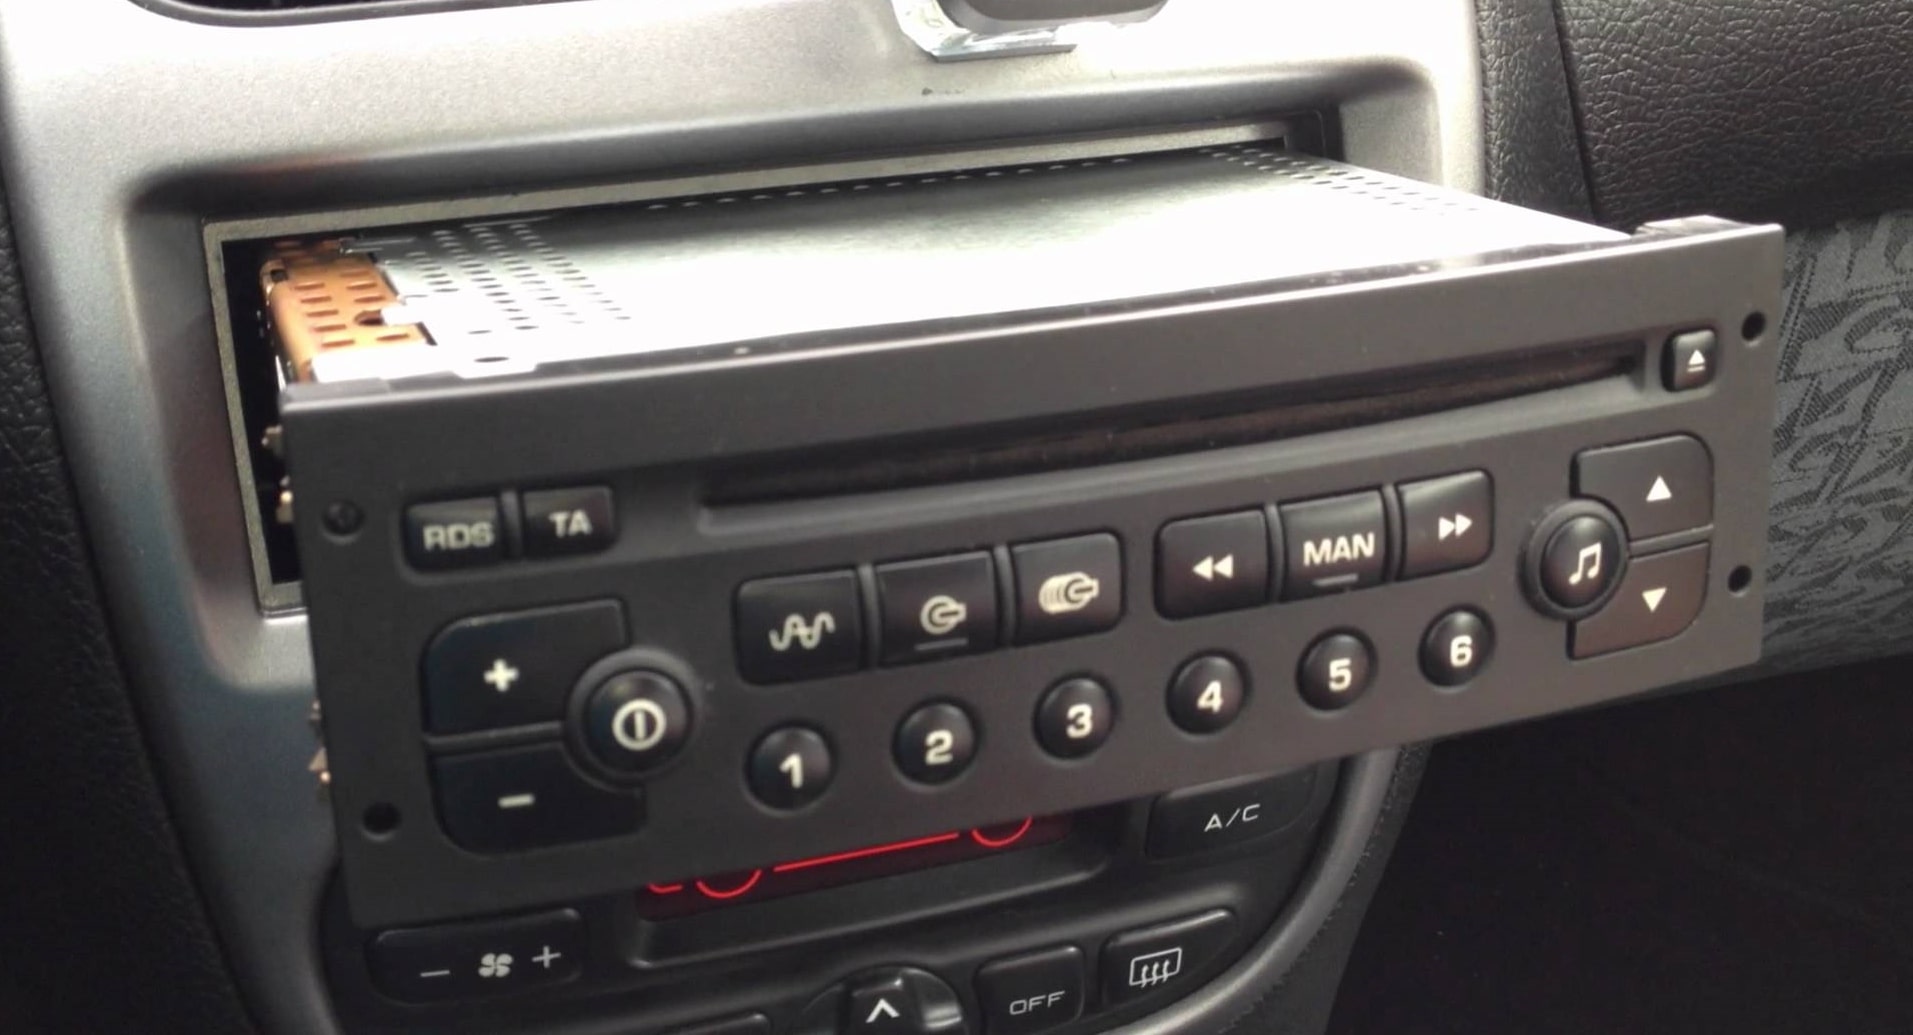 Peugeot 206 Radio Code